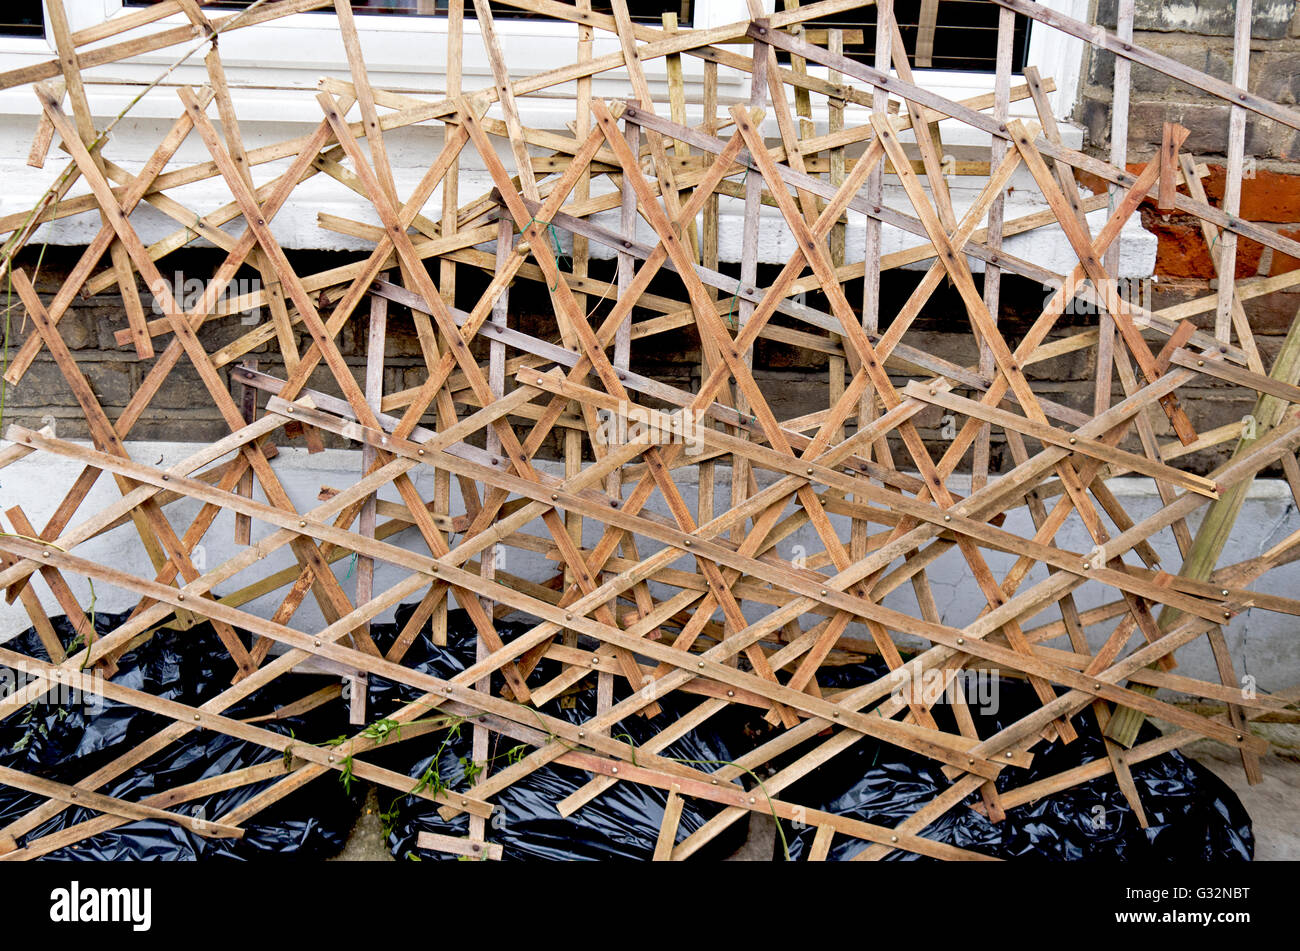 Criss-crossing wooden trellis Stock Photo